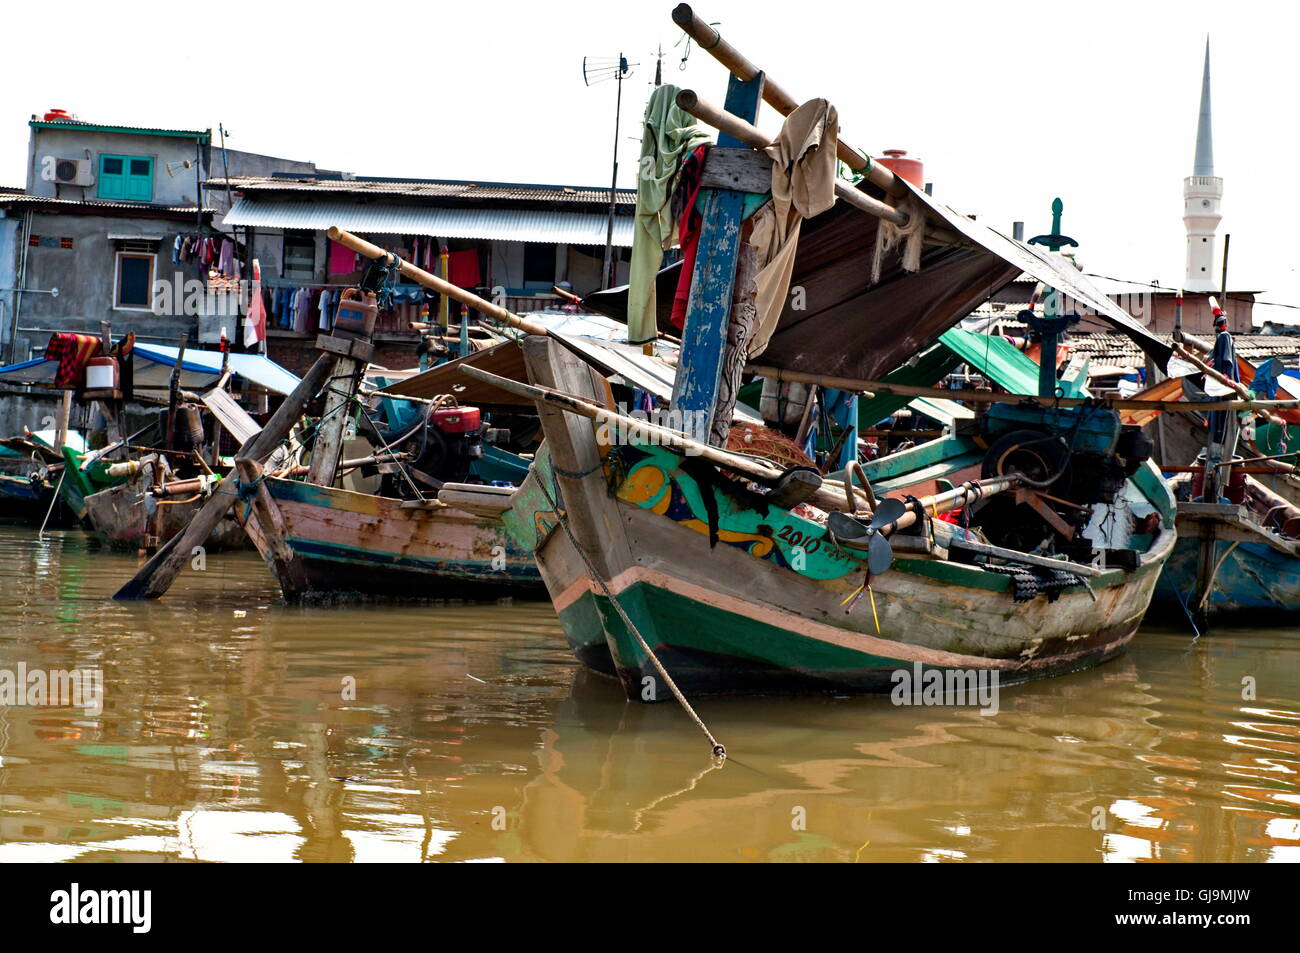 Slum In Jakarta Stockfotografie - Alamy